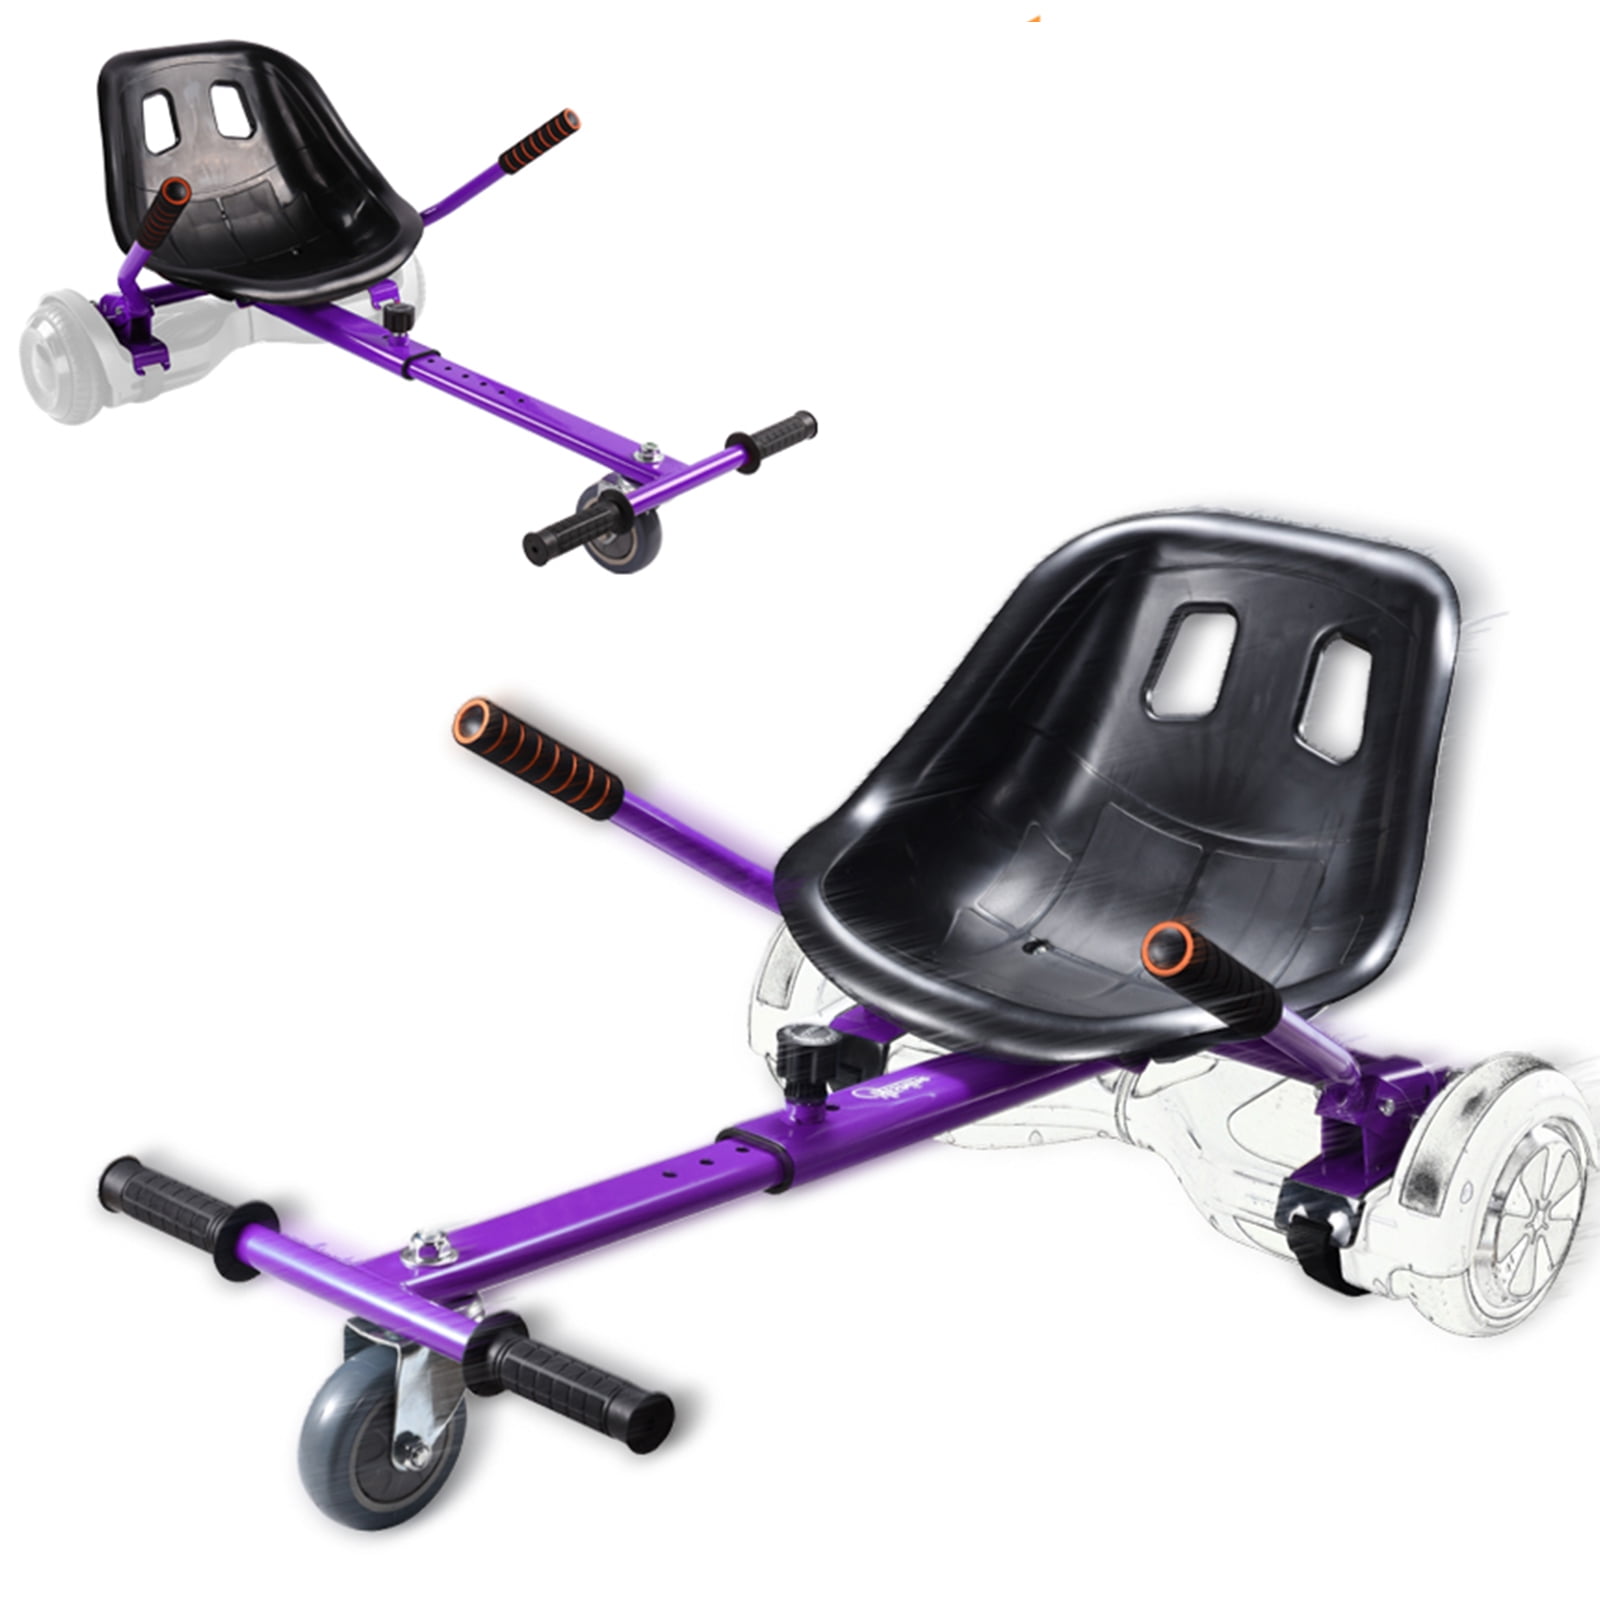 Hovercart Hoverkart Sitzscooter Kartsitz Für E-Scooter Self Balance Hoverboard 